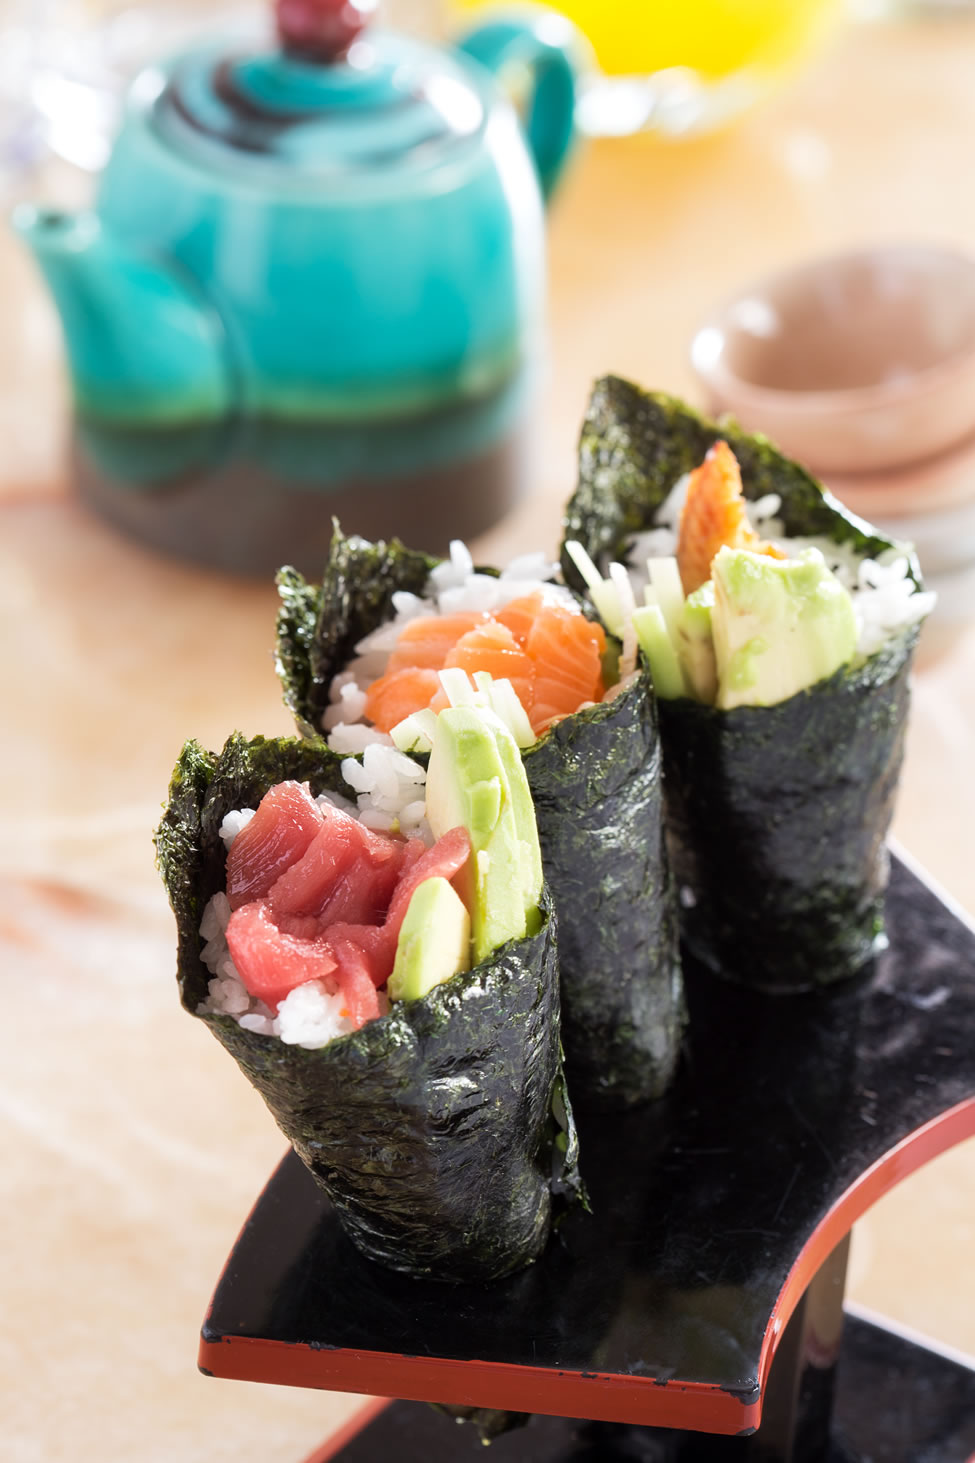 Te-Maki Sushi / Hand Rolled Sushi With Sea Weed